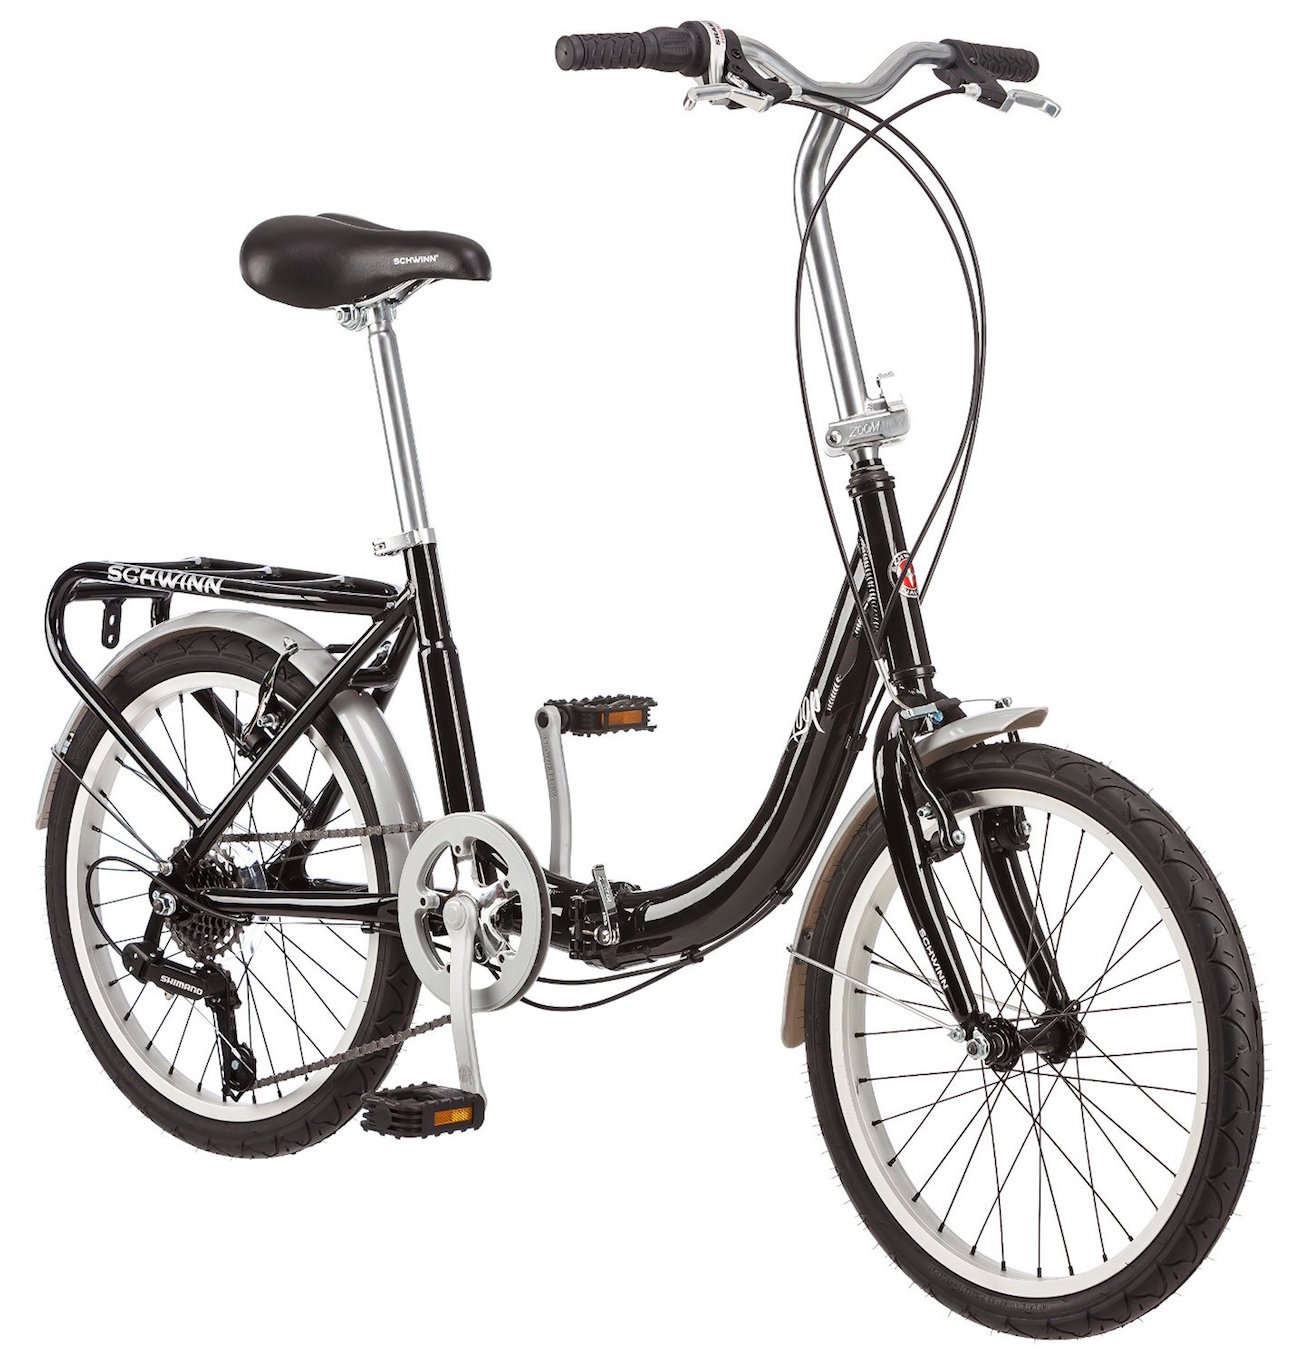  Schwinn  Loop Folding  Bike  Review Cheap Secure and Easy 